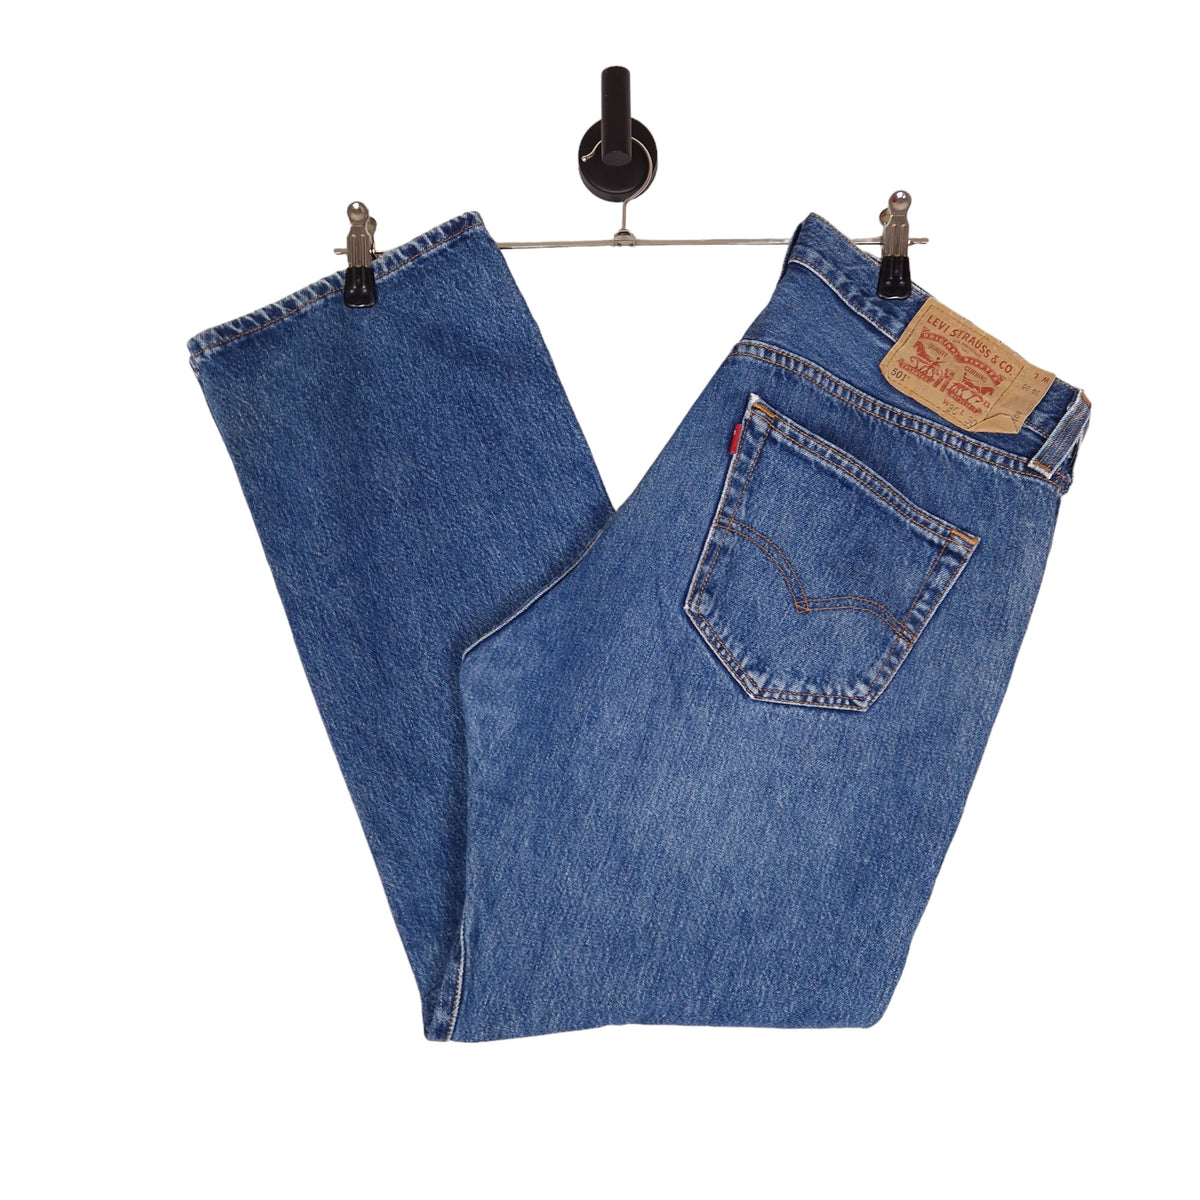 Levi's 501's Denim Jeans - Size W36 L30